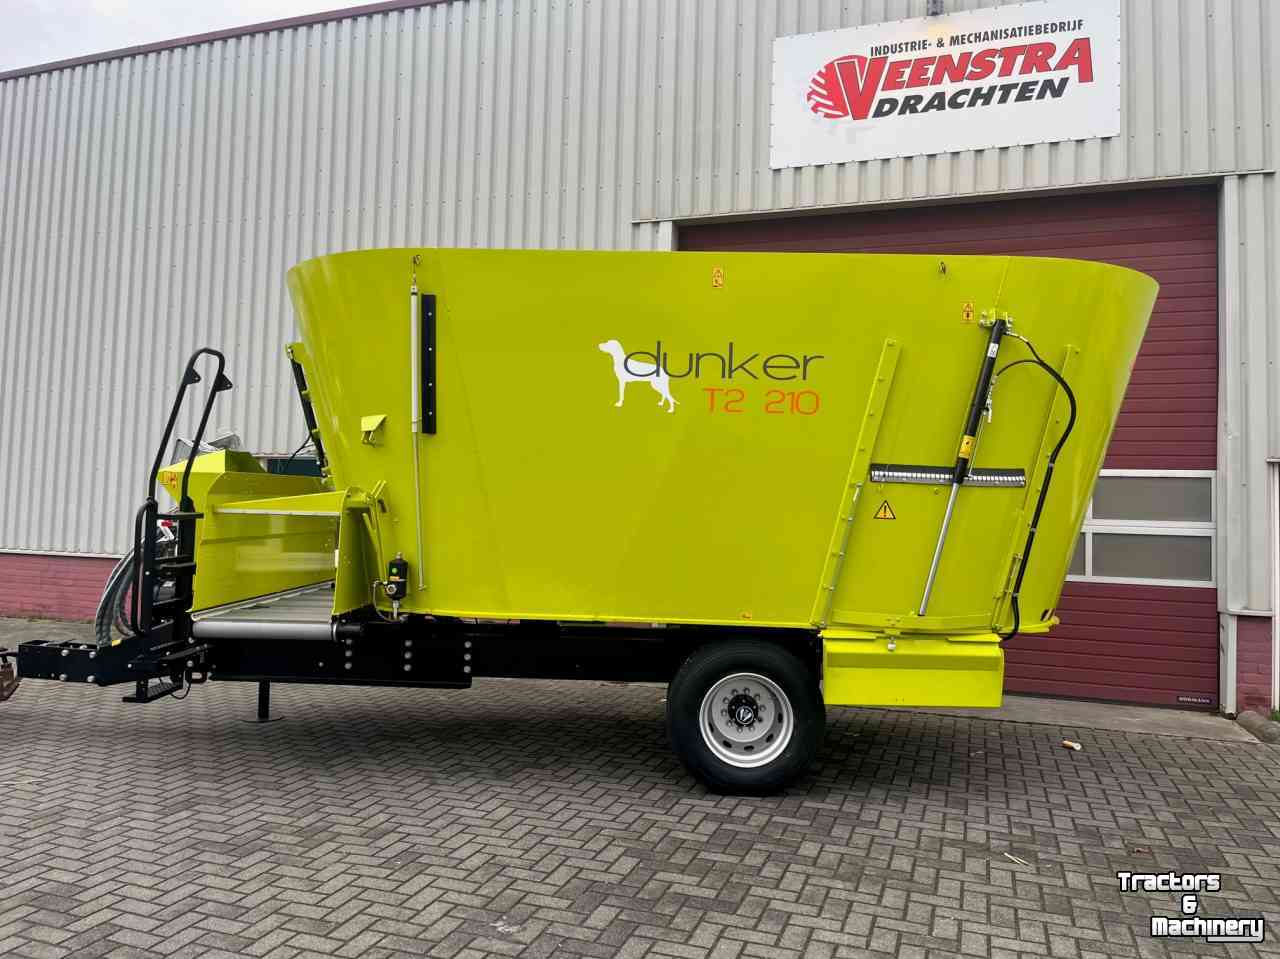 Futtermischwagen Vertikal Storti Dunker T2 210 mengwagen